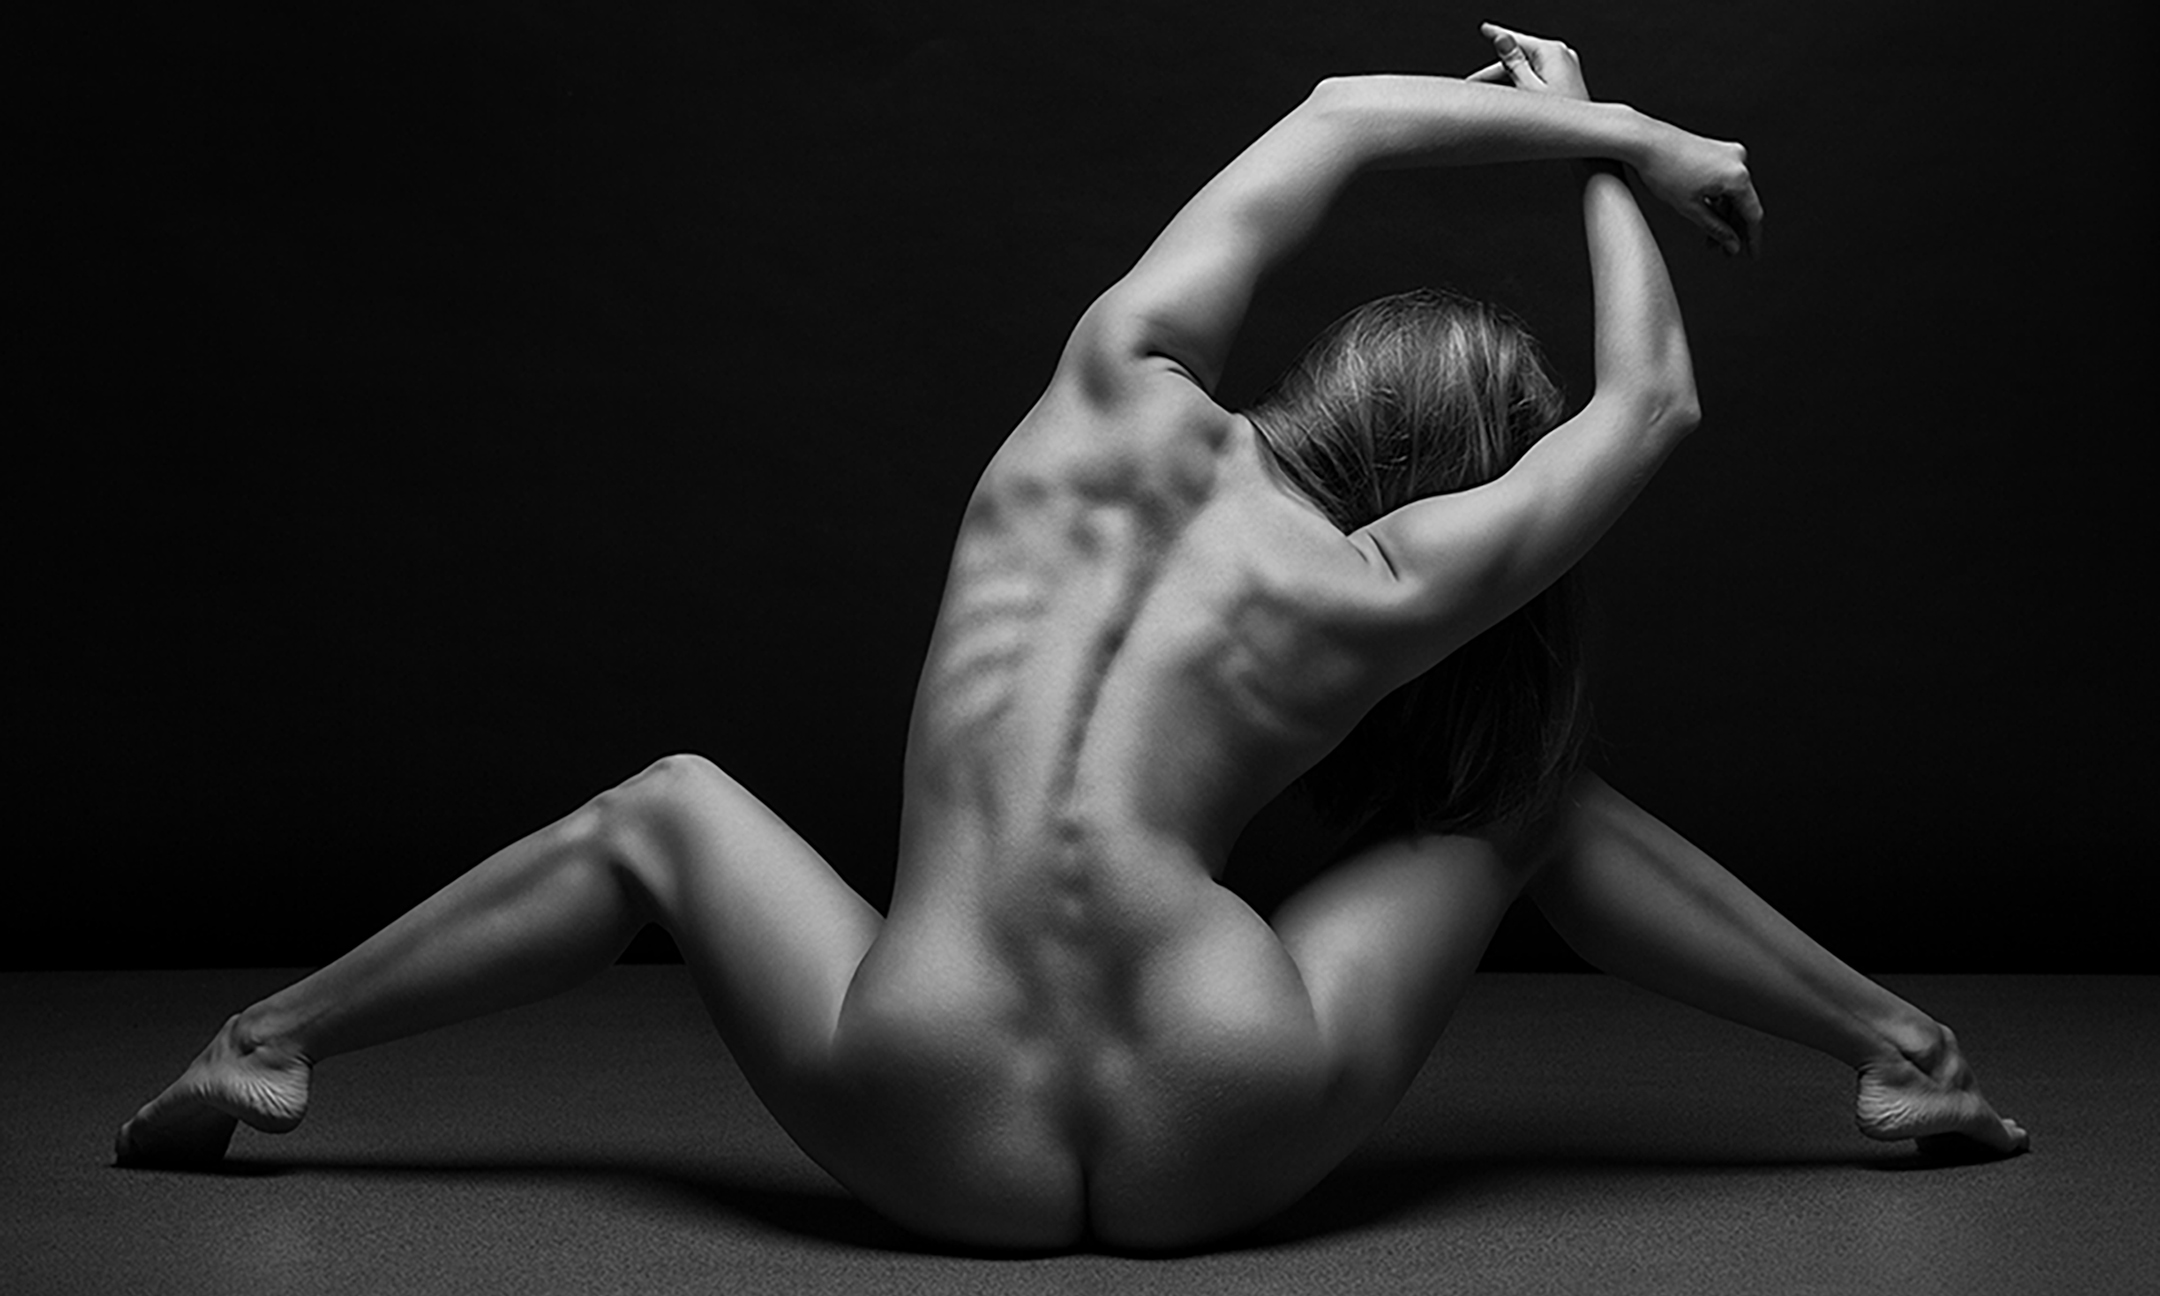 Fine art nude photography tumblr